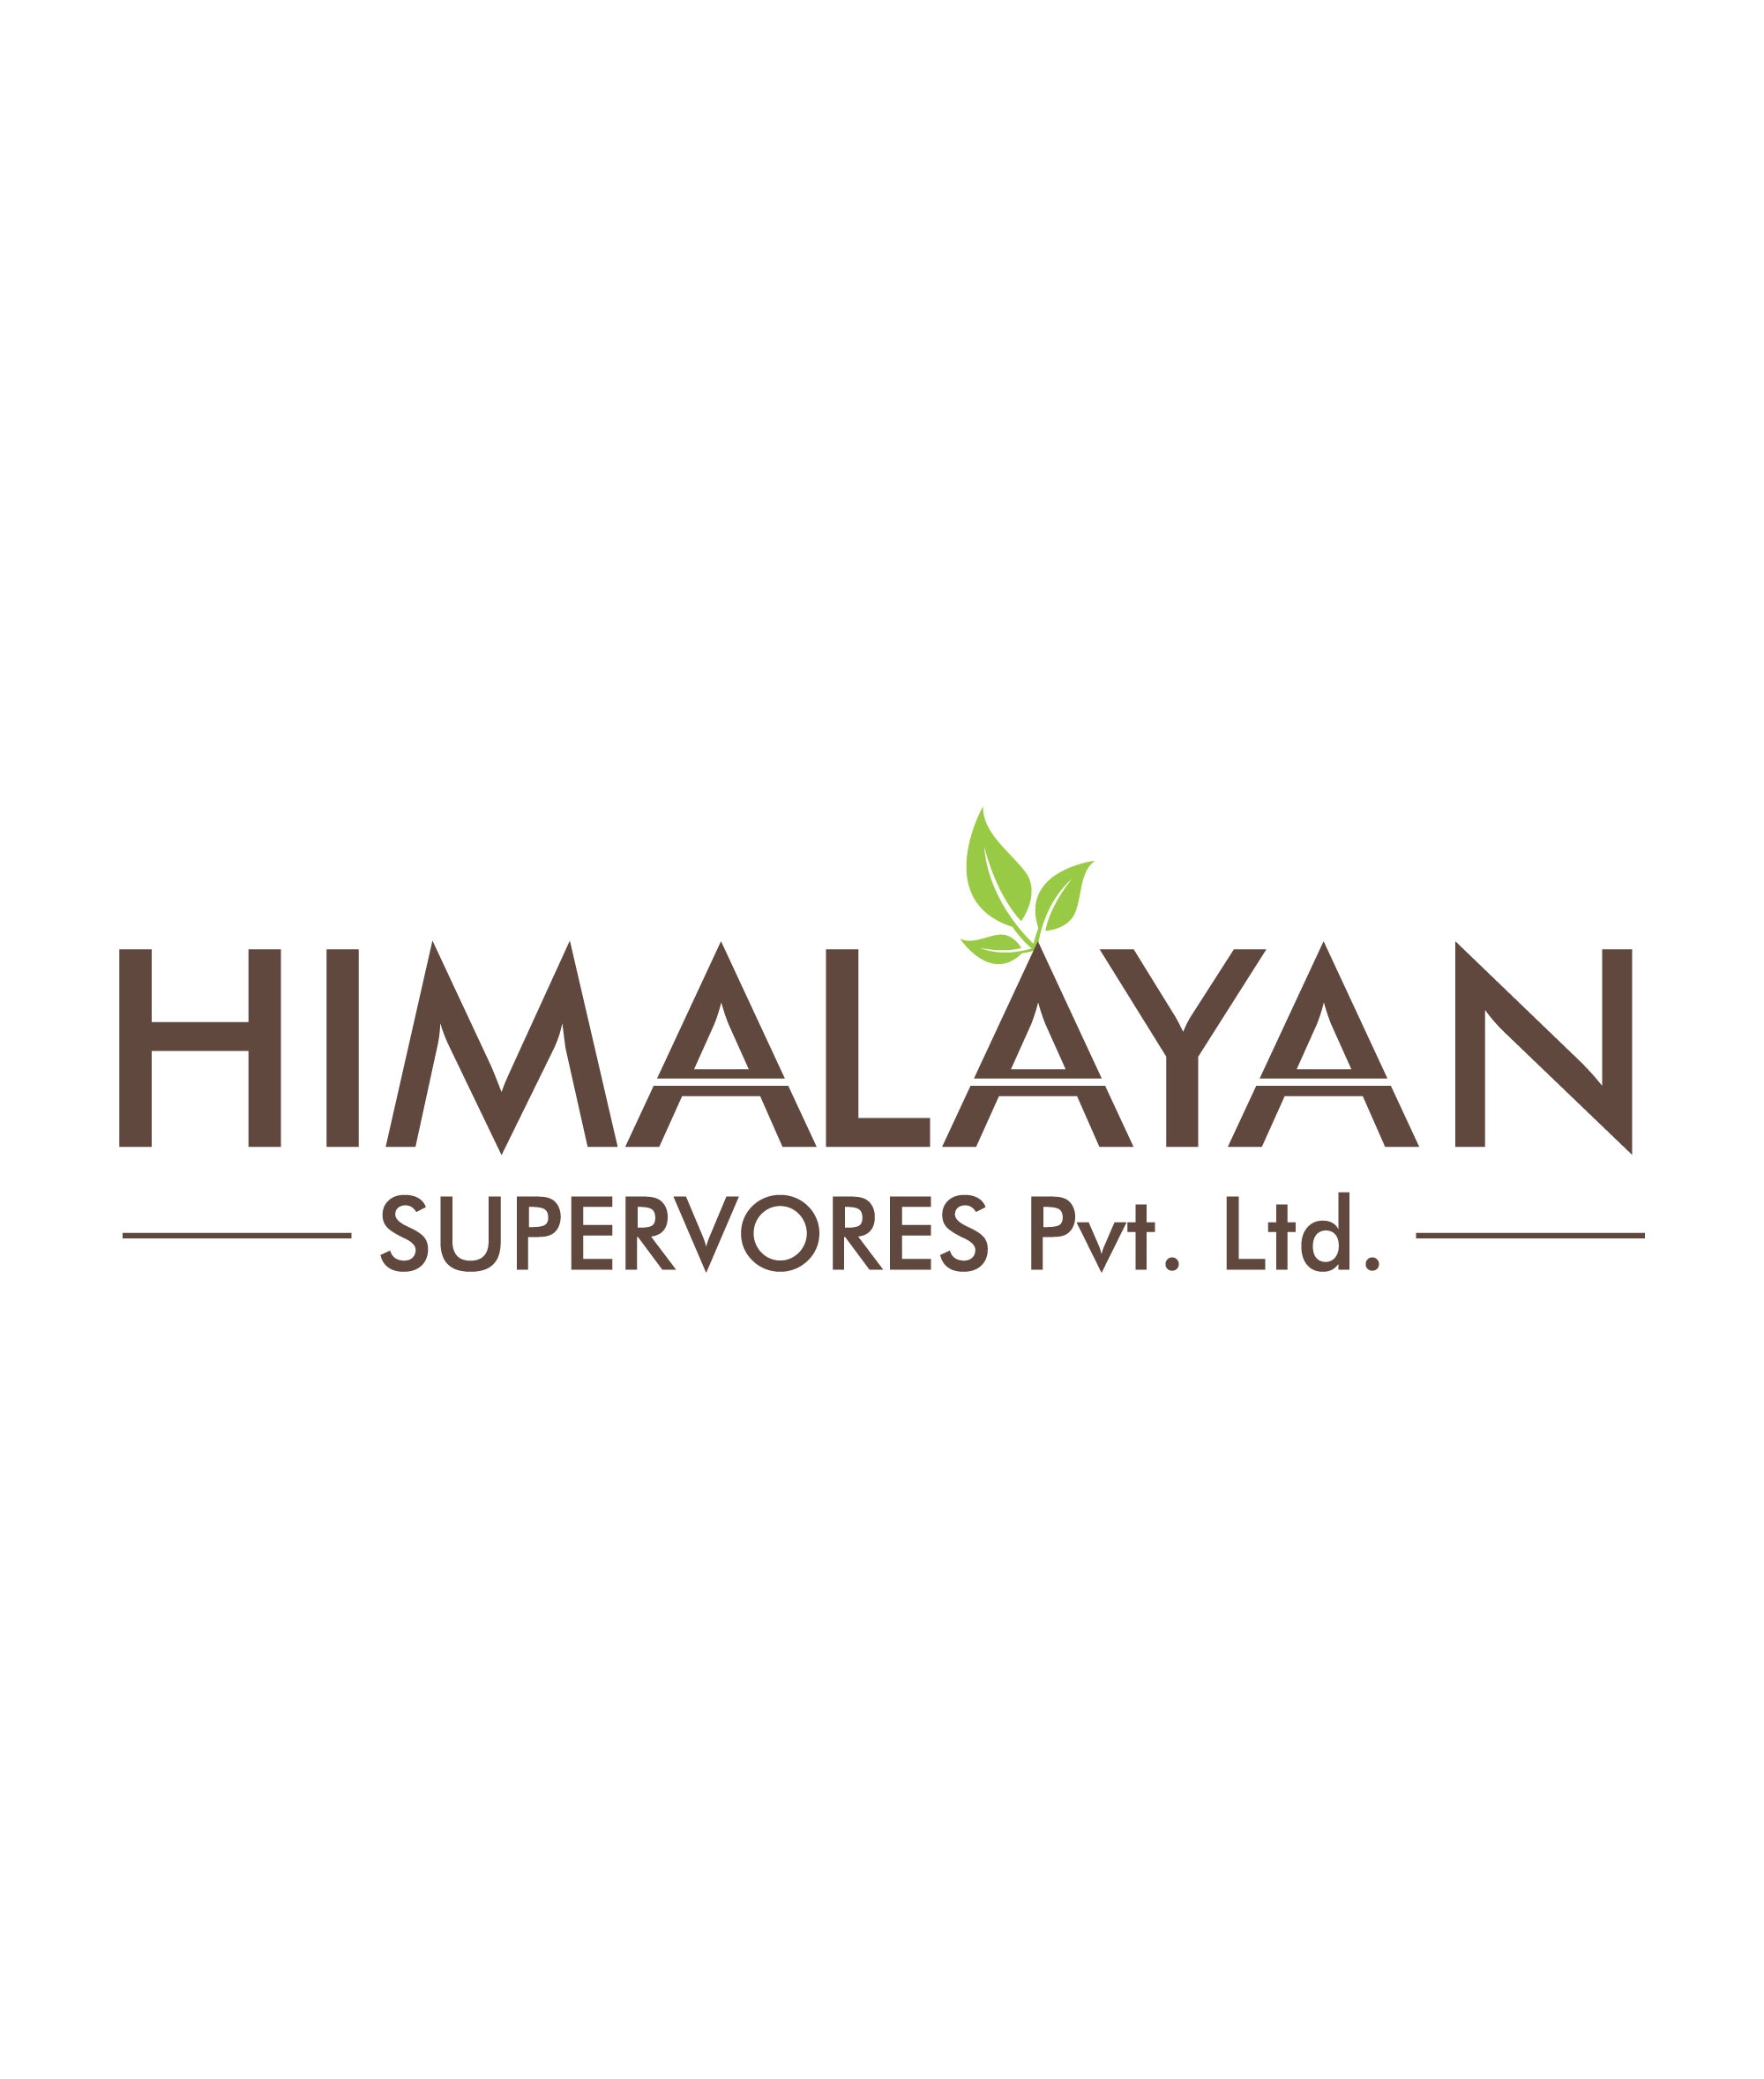 Himalayan Supervores